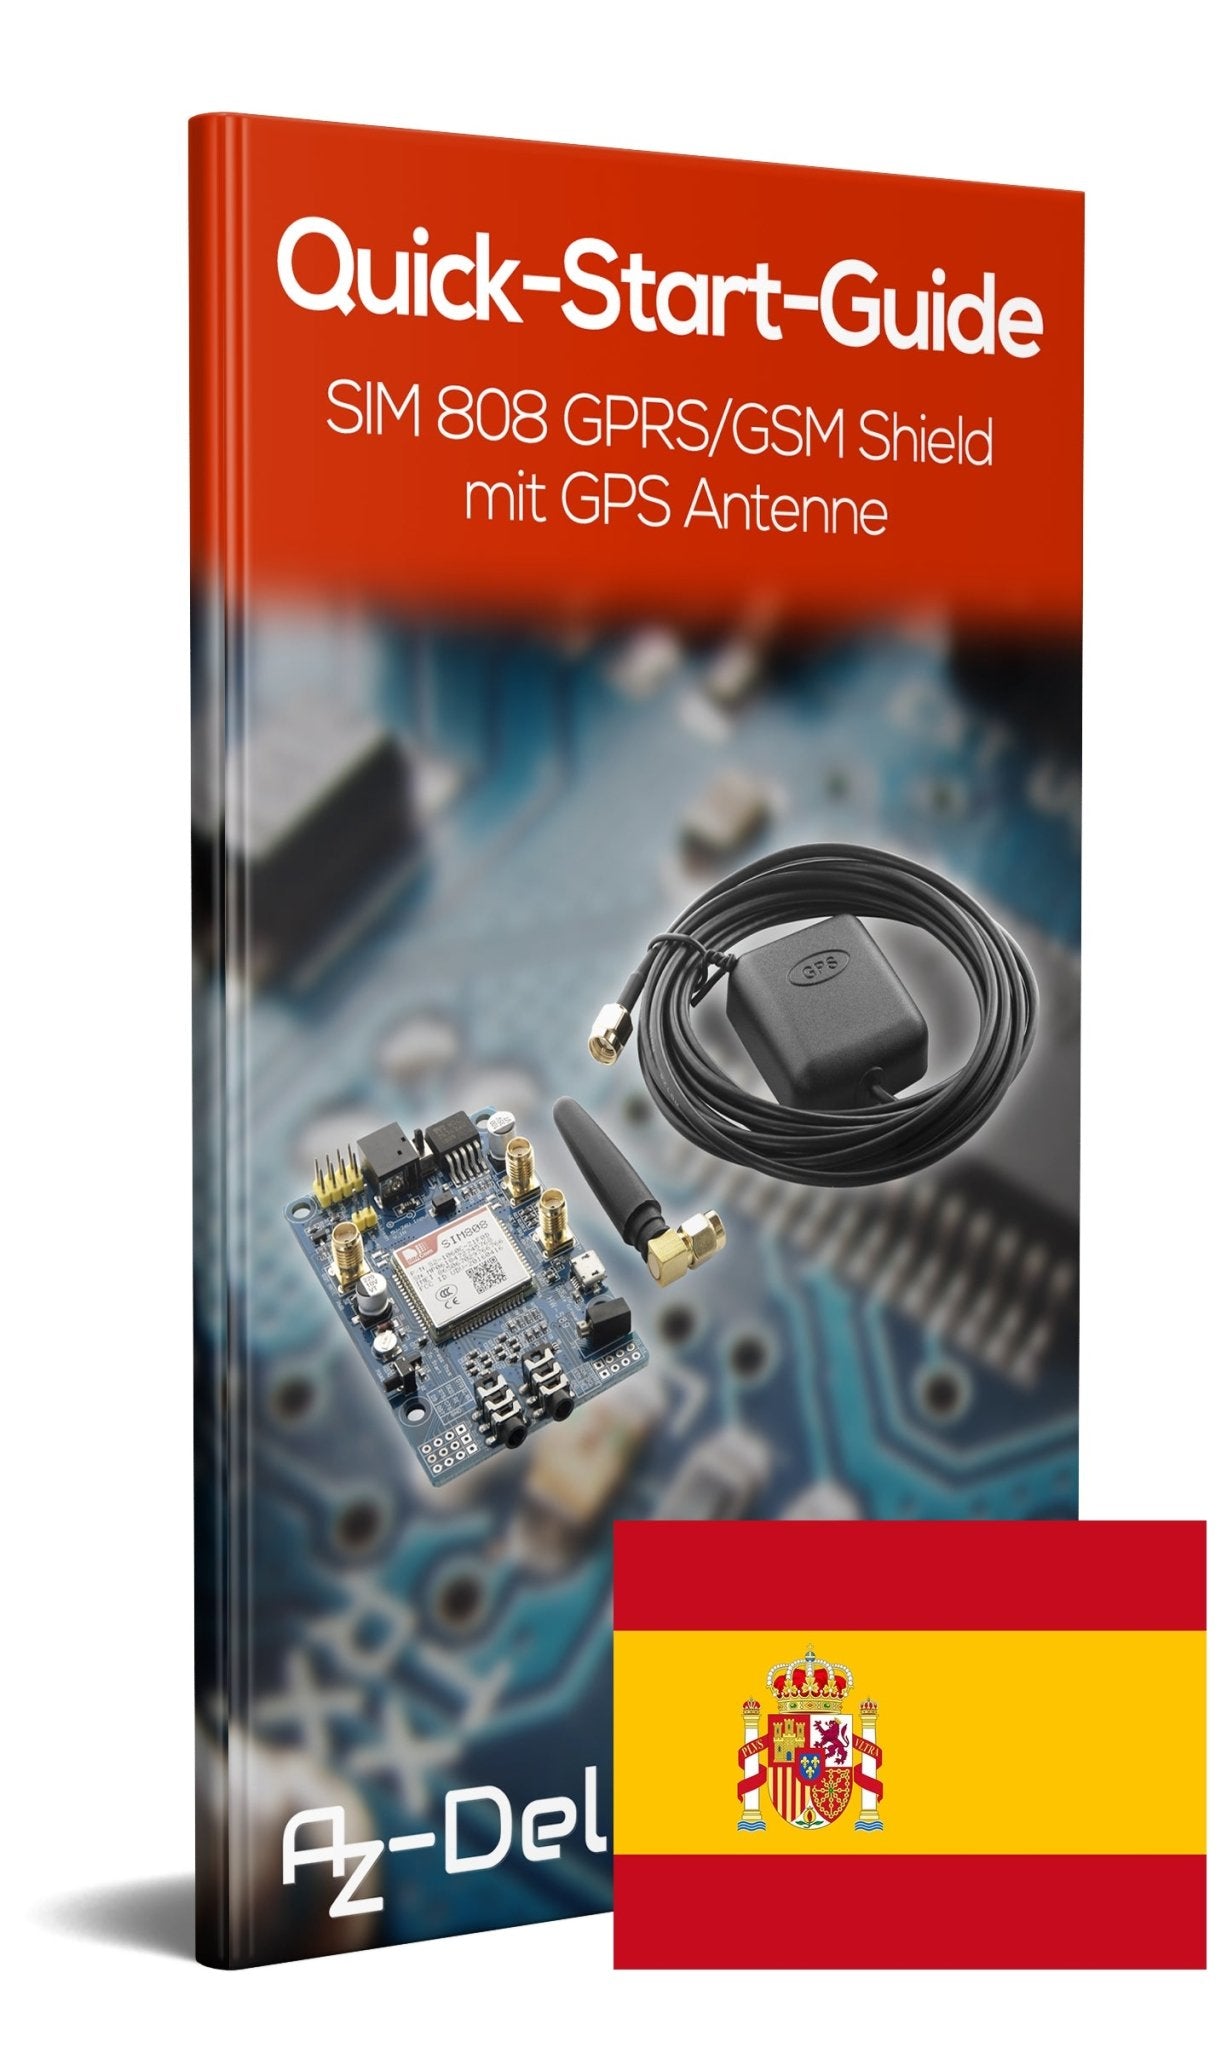 SIM 808 GPRS/GSM Shield mit GPS Antenne - AZ-Delivery